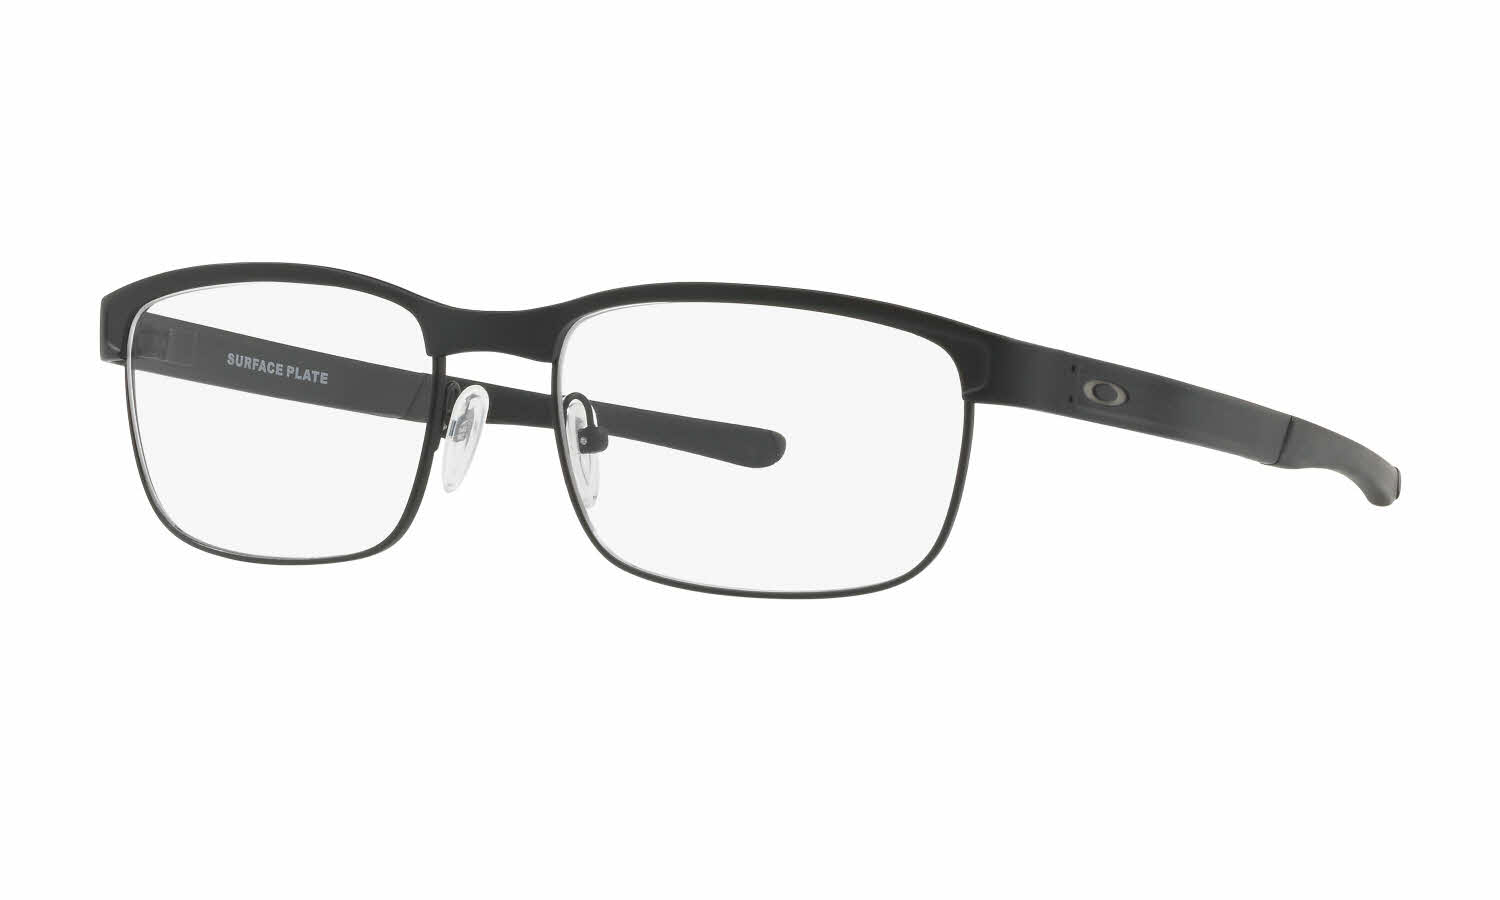 Oakley Surface Plate Eyeglasses | FramesDirect.com